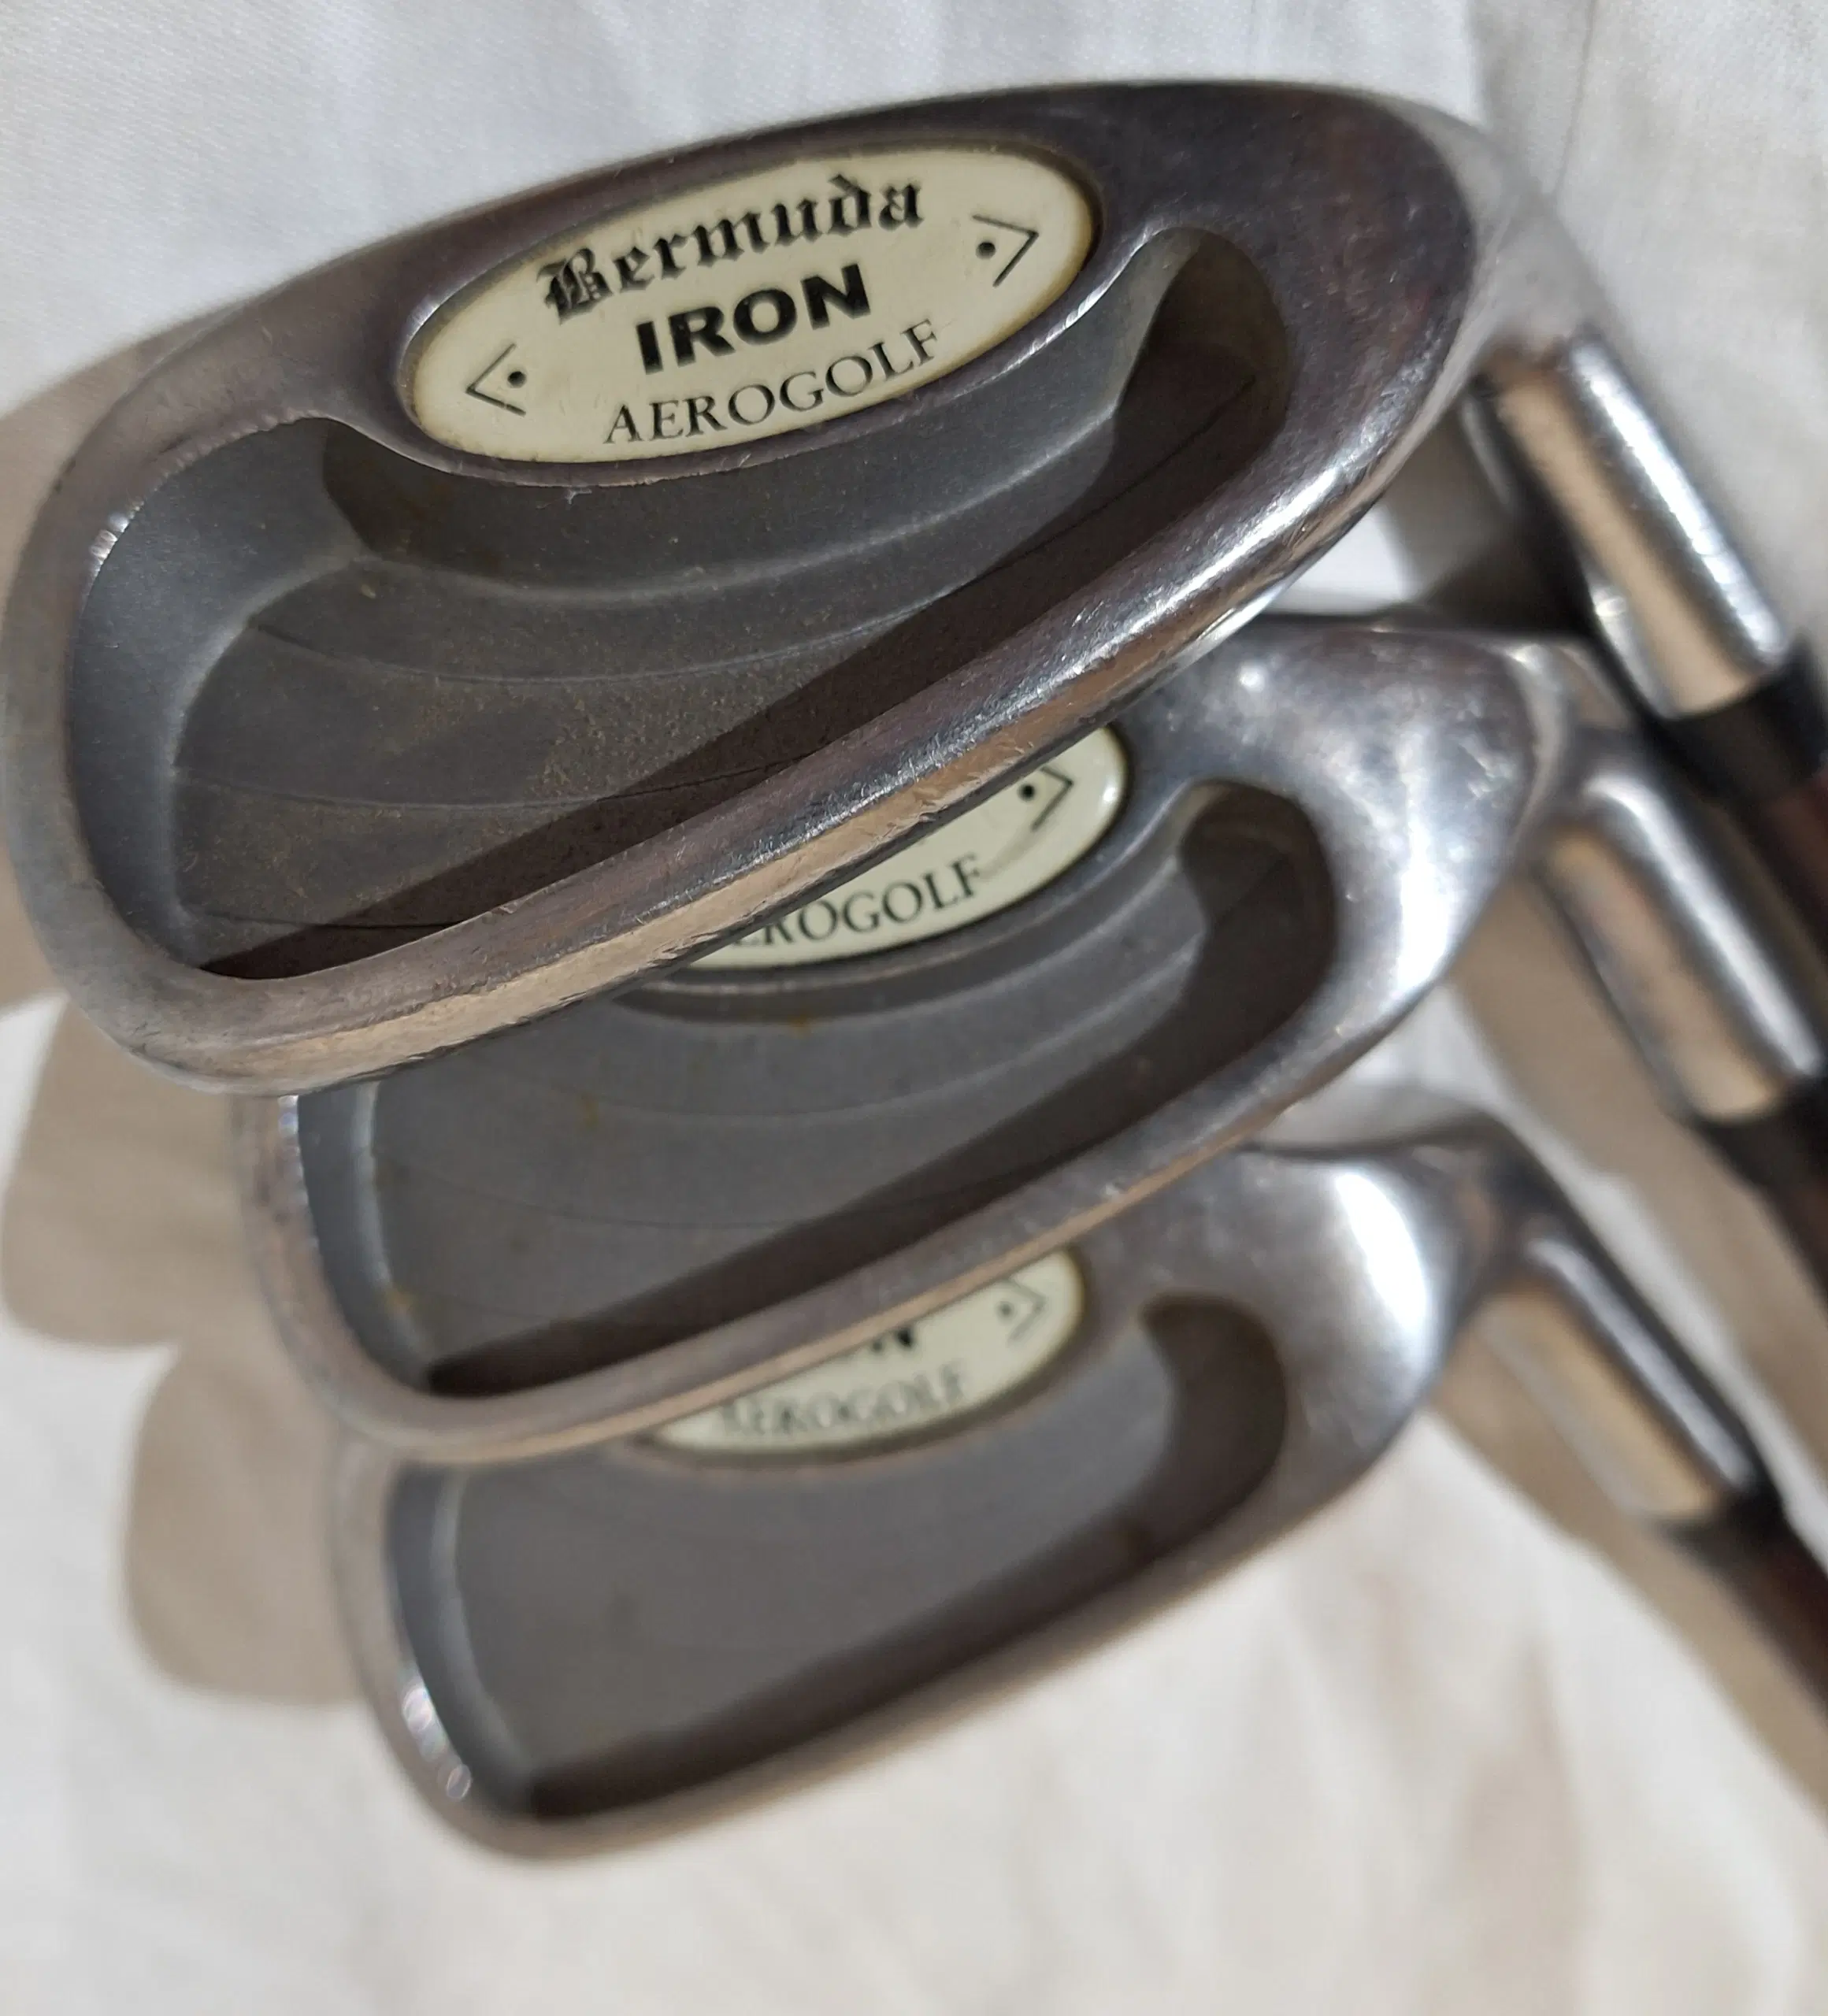 Bermuda golfsæt made in the US